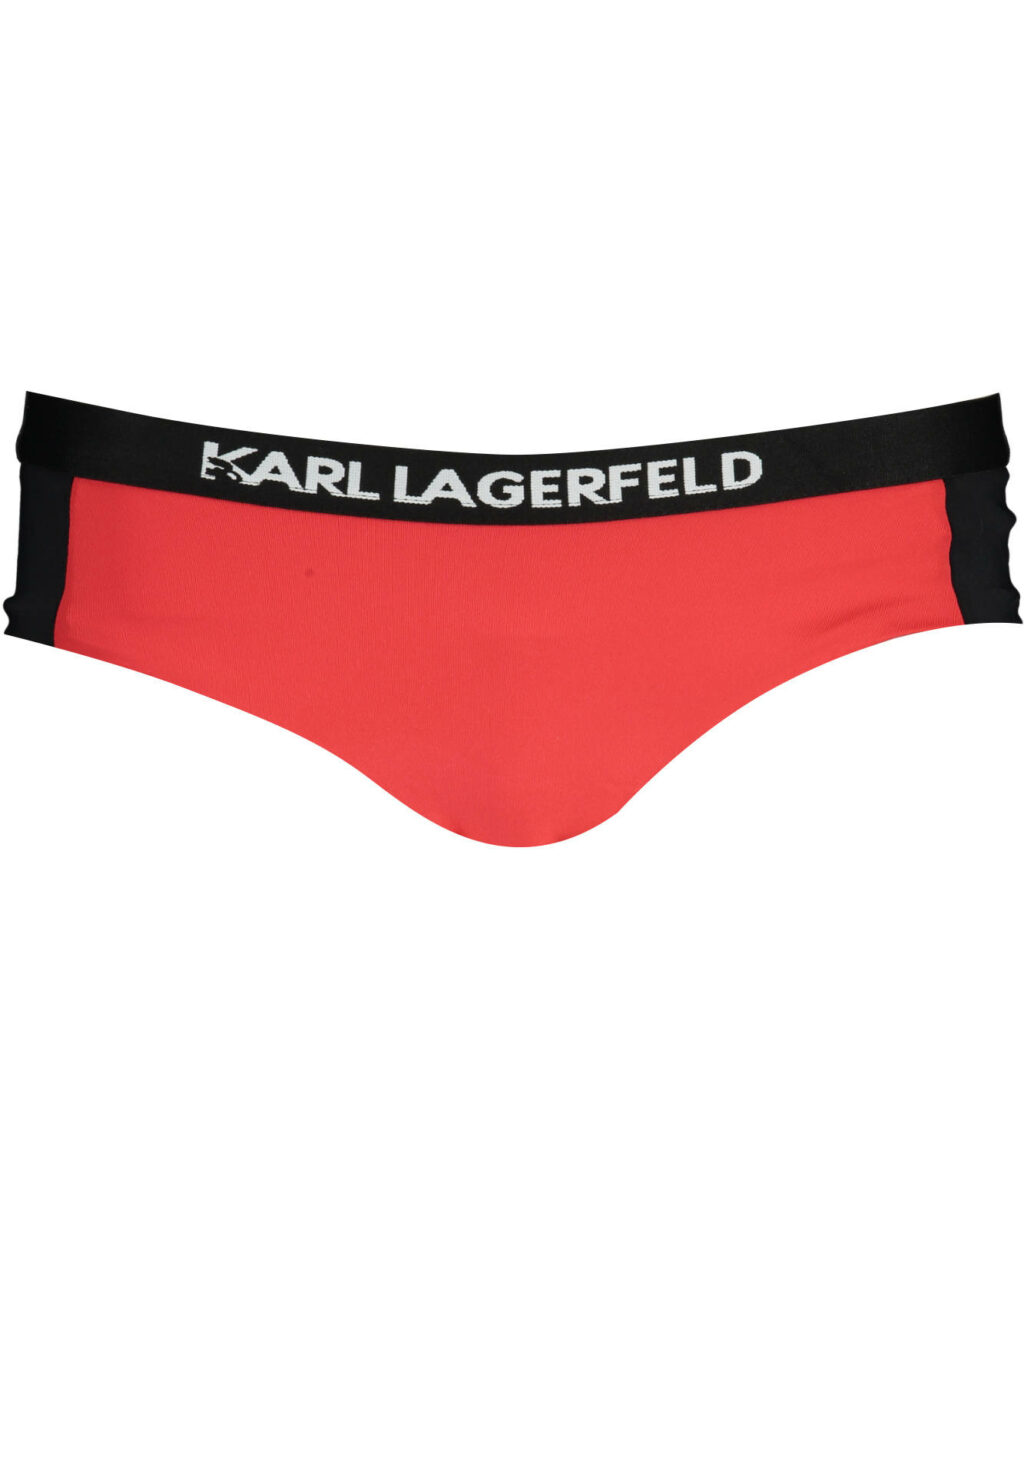 KARL LAGERFELD BEACHWEAR SWIMSUIT SIDE BOTTOM WOMAN RED KL22WBT09_ROSSO_RED